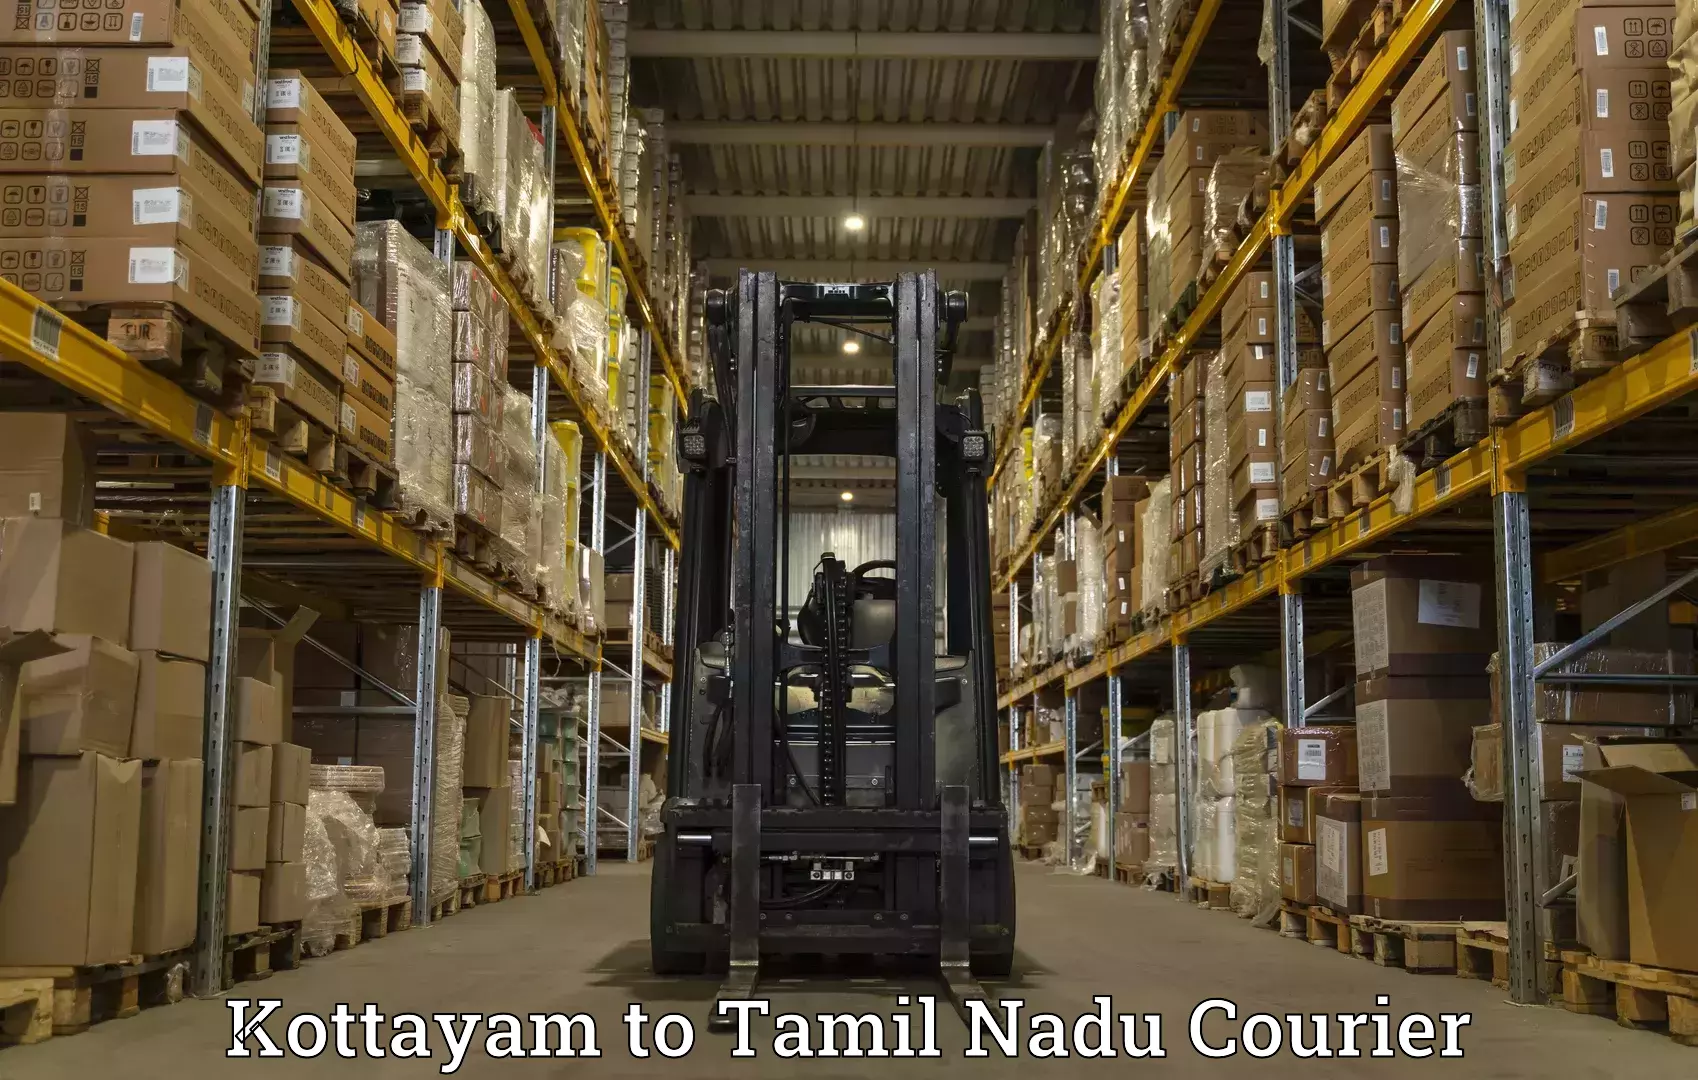 Courier service comparison Kottayam to Rathinasabapathy Puram